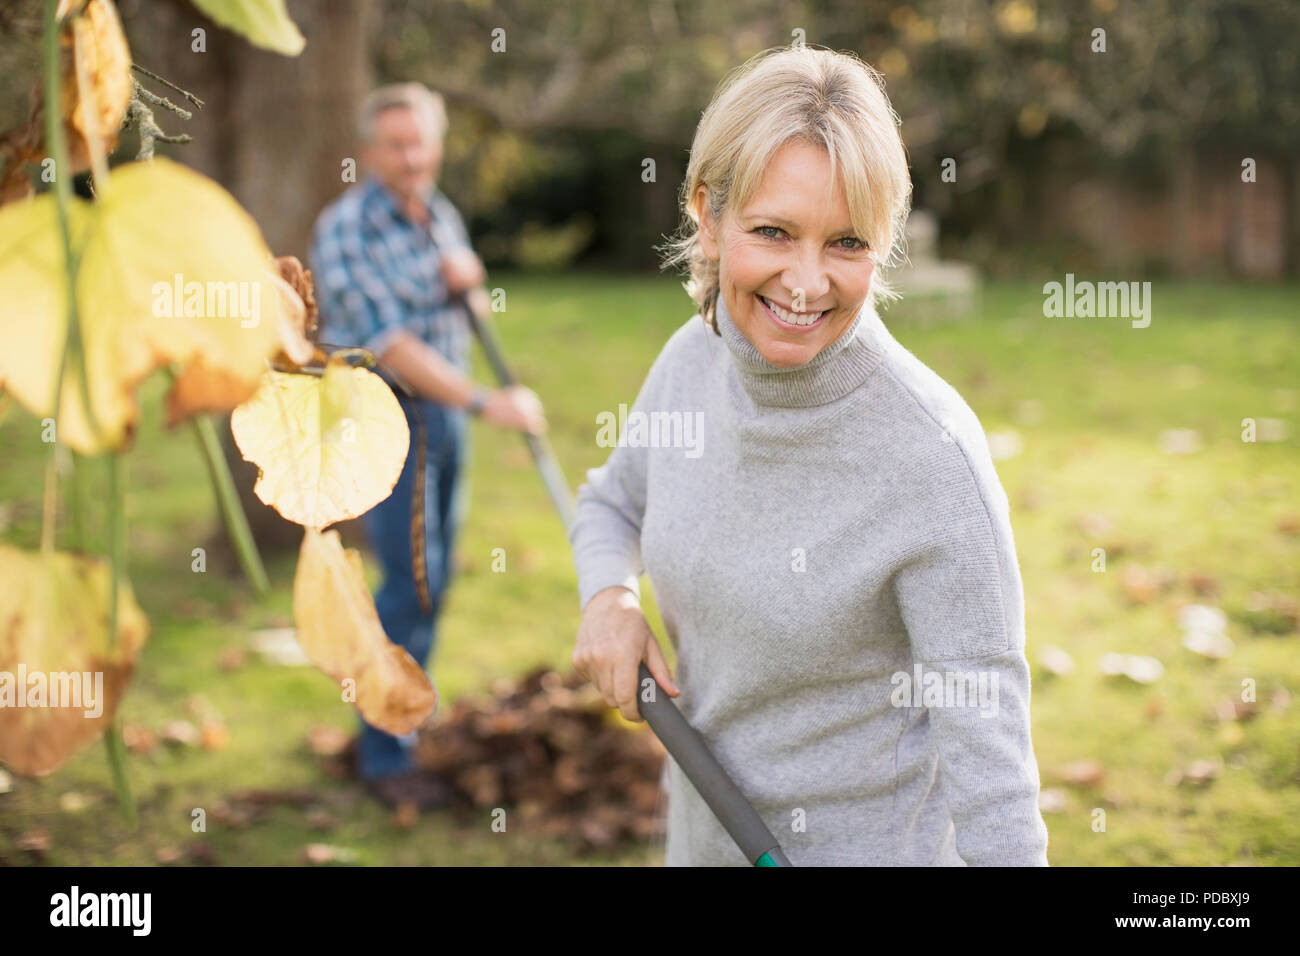 Porträt Lächeln, zuversichtlich, reife Frau harken Blätter im Herbst Hinterhof Stockfoto